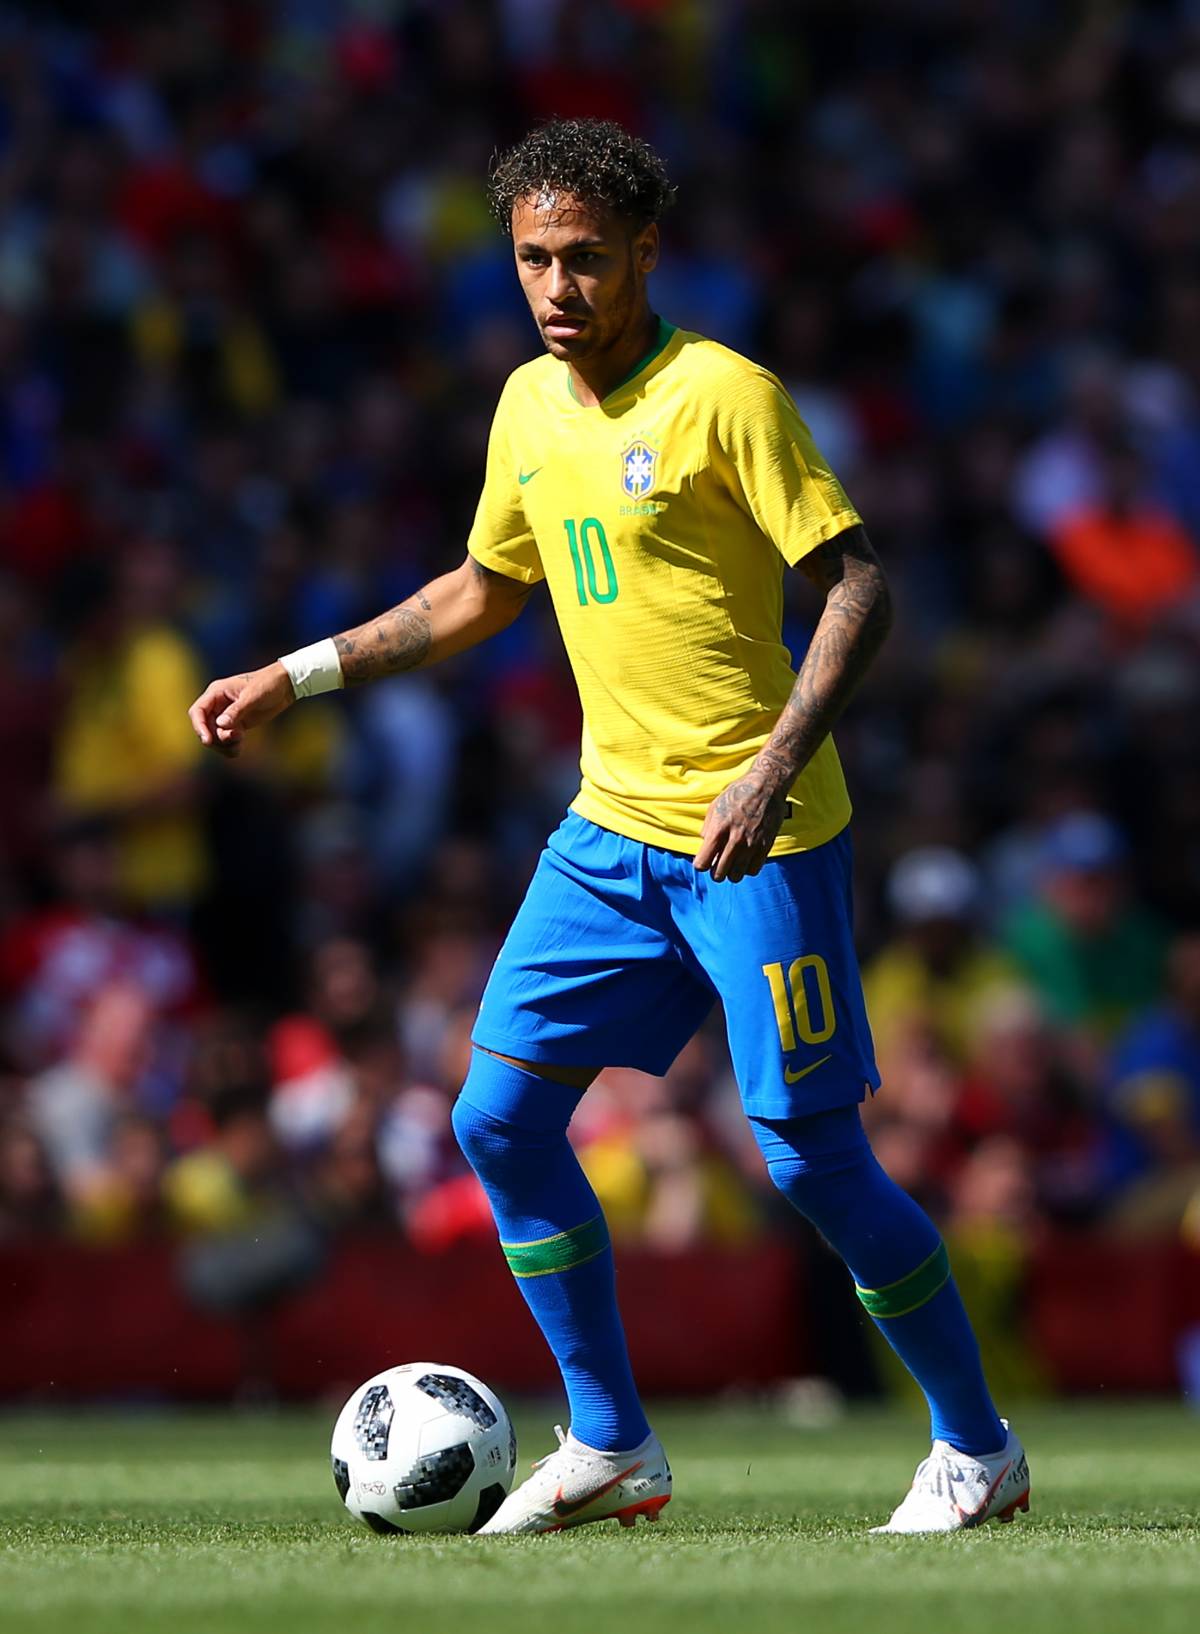 Mondiali, Brasile nei guai: Neymar si è infortunato?